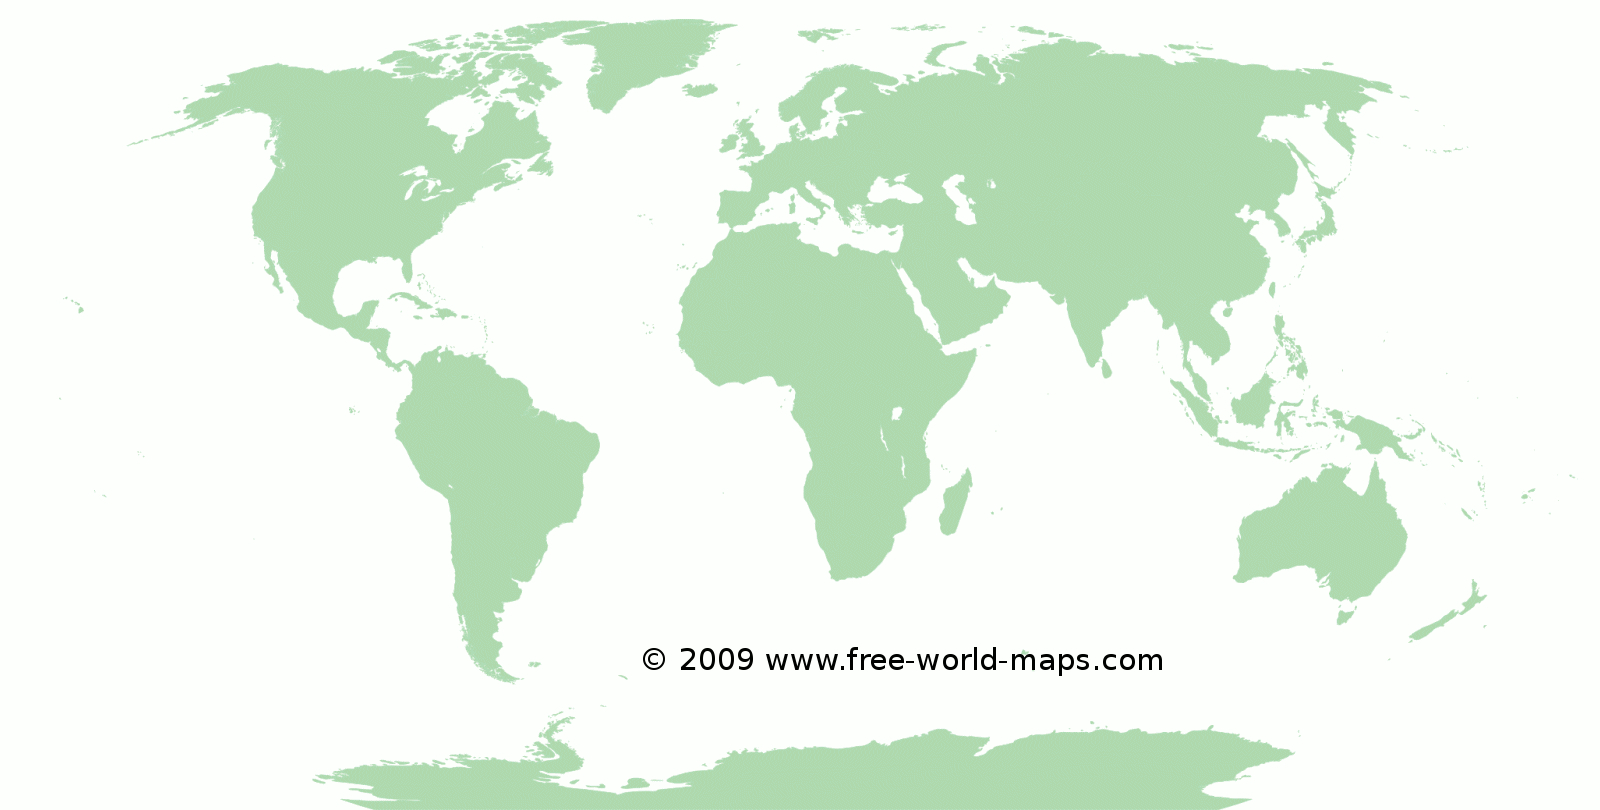 Printable Blank World Maps | Free World Maps - 8X10 Printable World Map